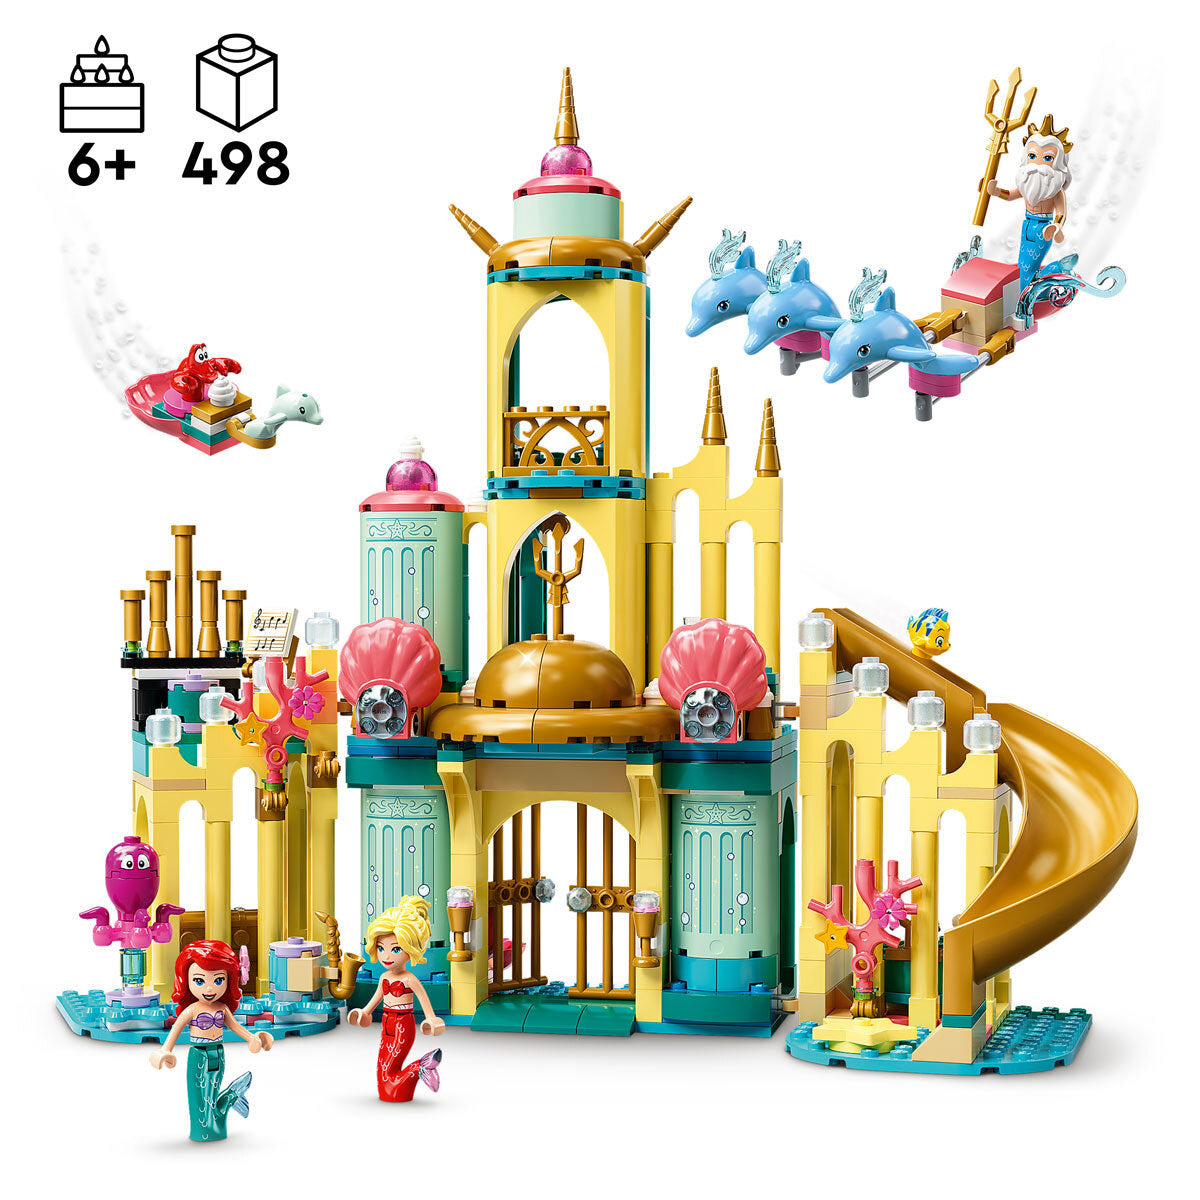 LEGO Disney Princess - Ariel's Underwater Palace 43207